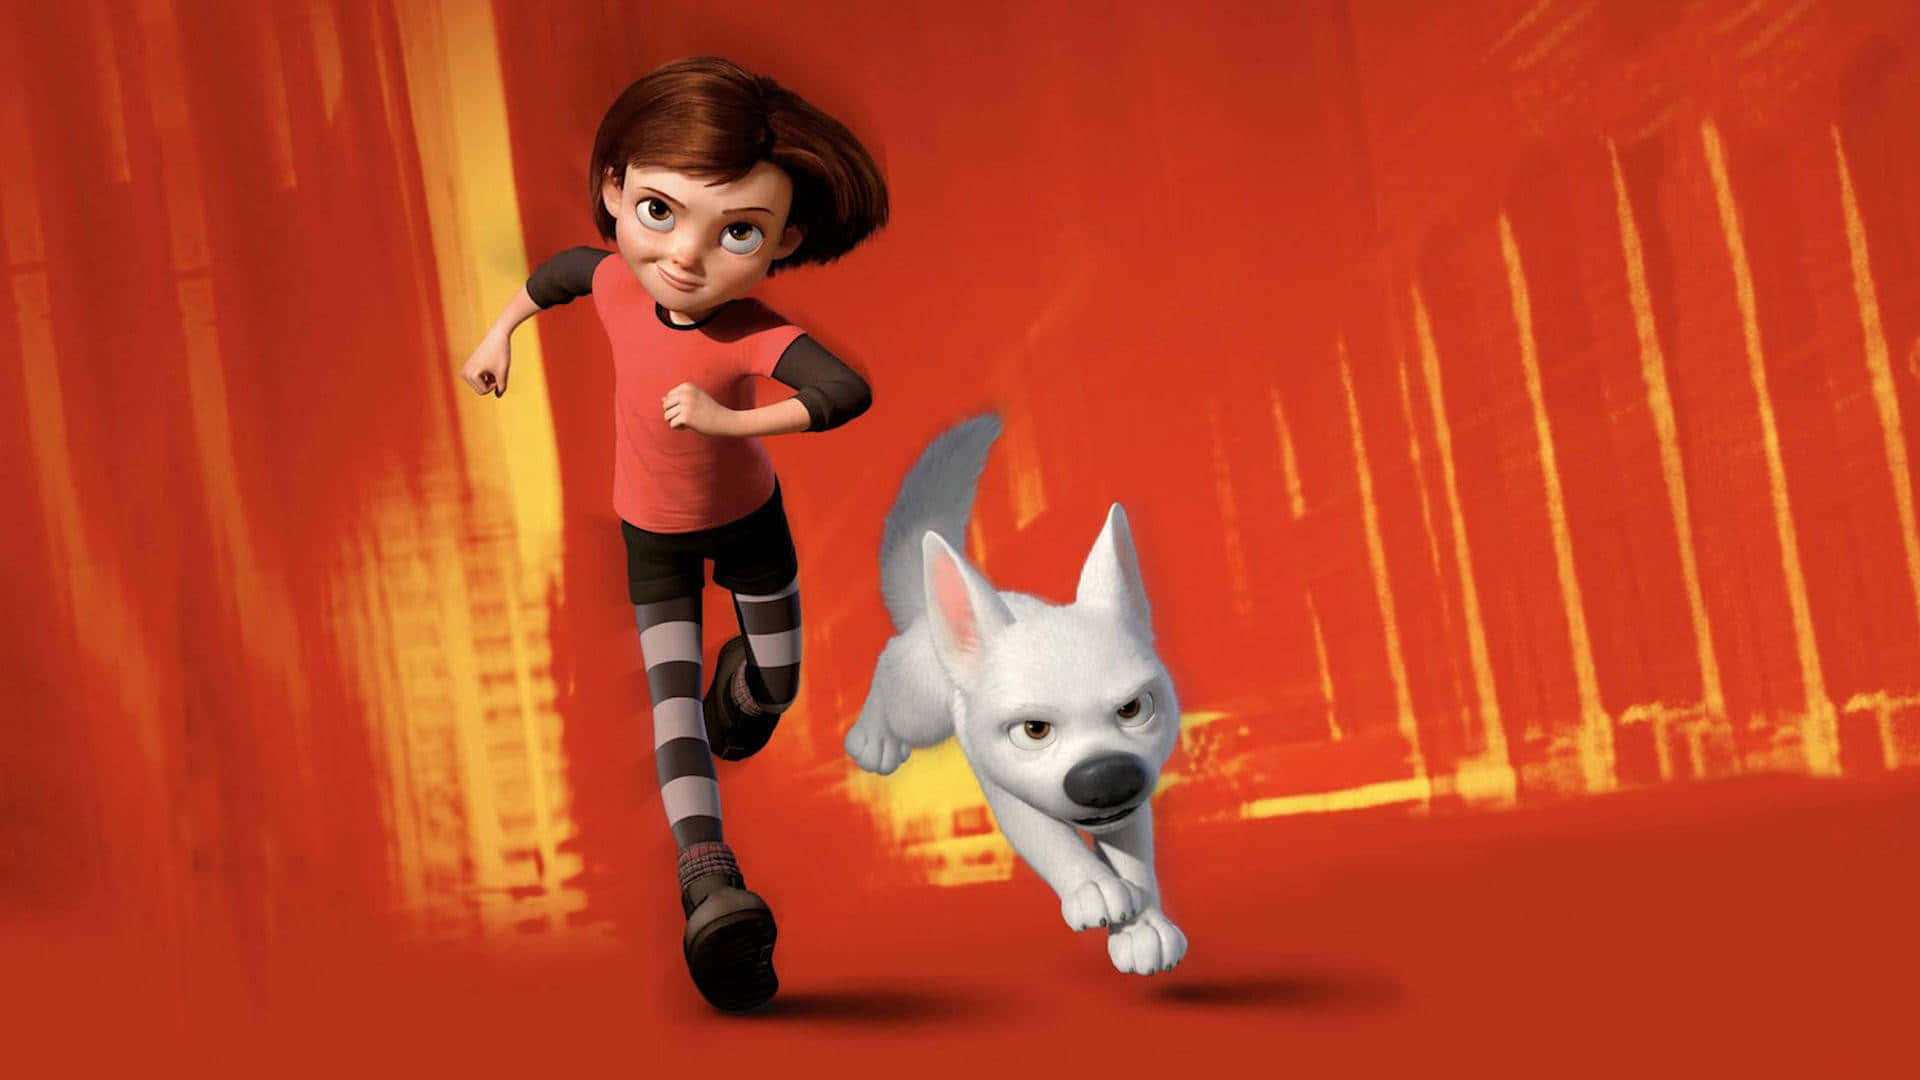 A Cartoon Girl Running With A Dog